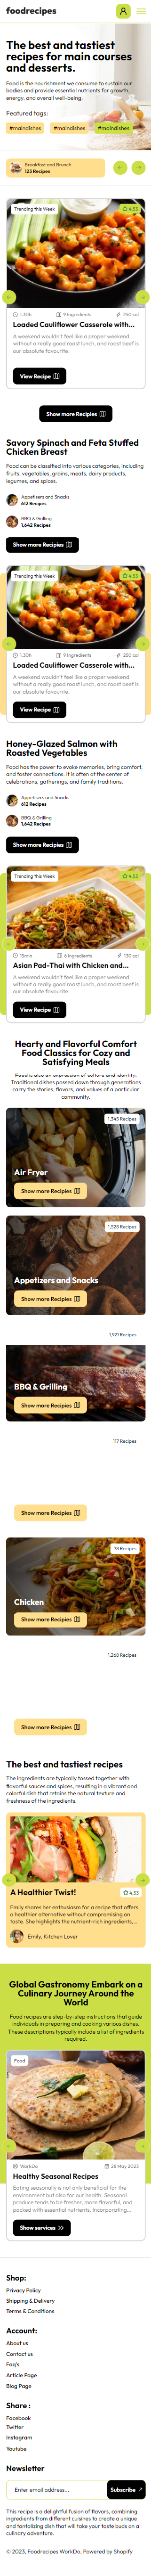 Food Recipes Shopify Theme - WorkDo